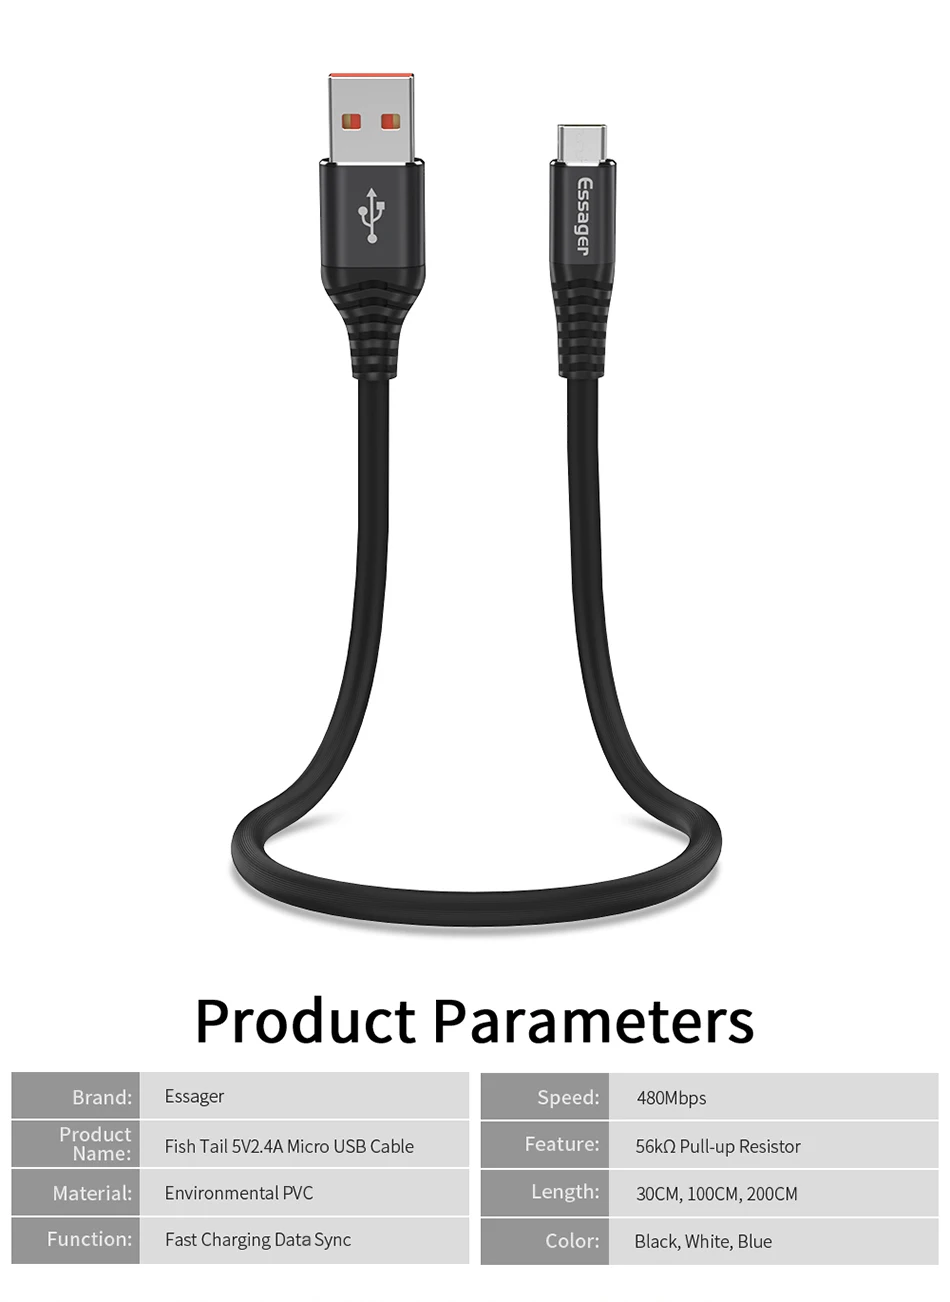 Usb-кабель Essager type-C для Xiaomi redmi note 8 Pro OnePlus 6t huawei mate 20 Pro USB-C type-C кабель для зарядки и передачи данных